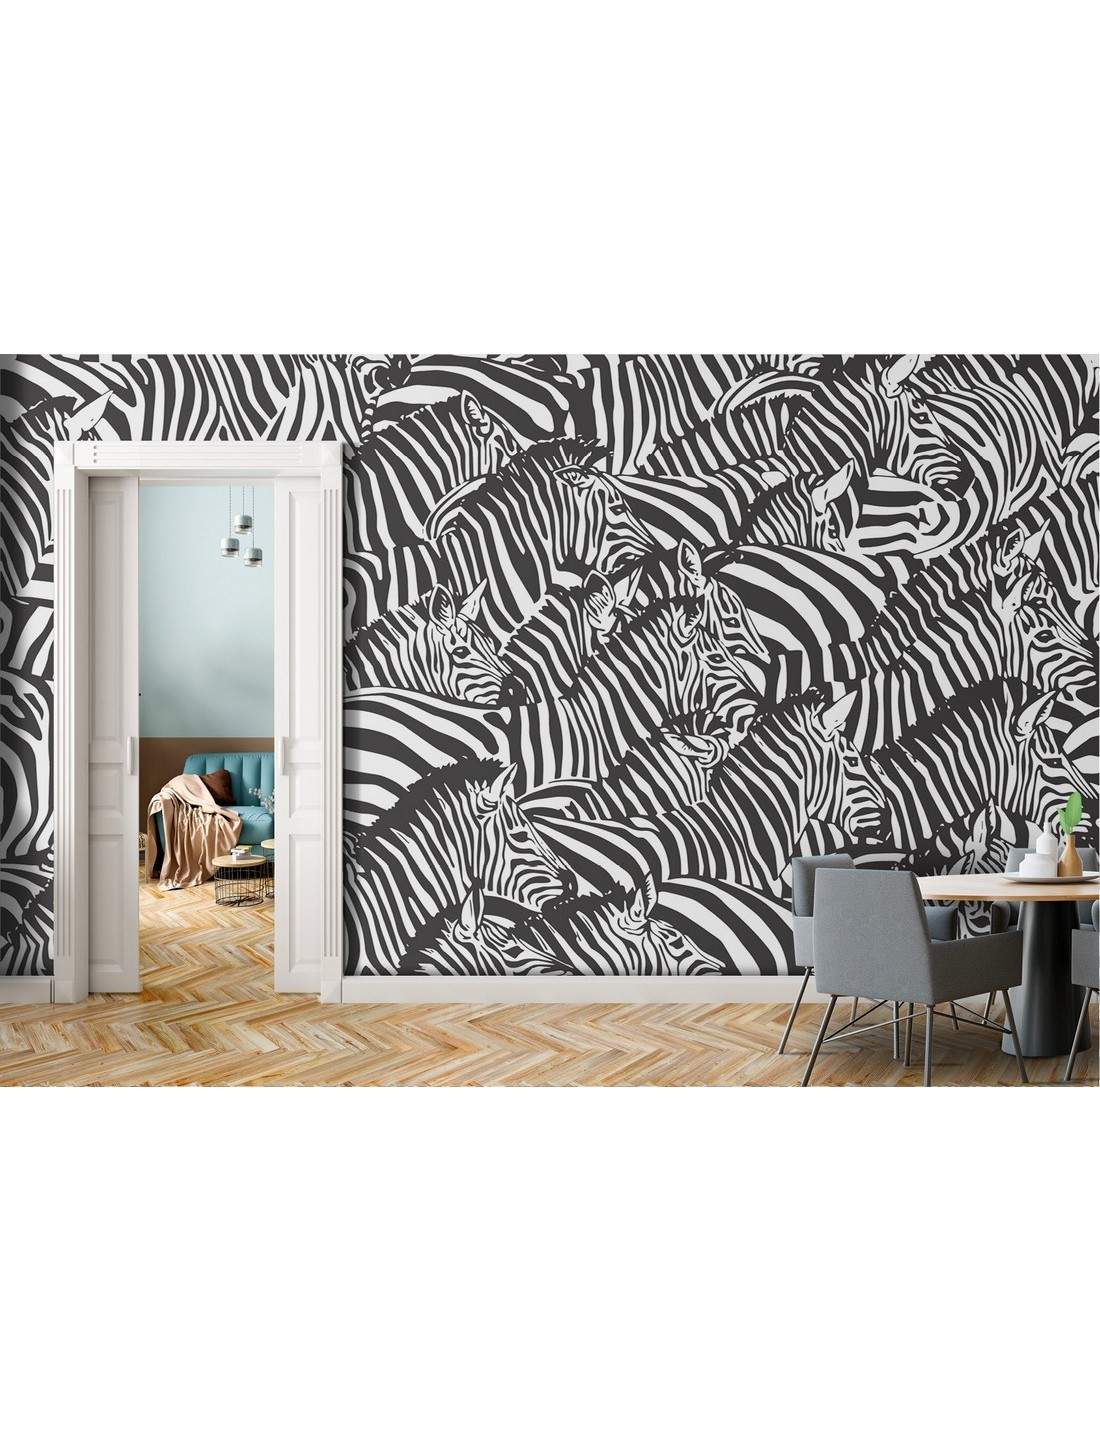 Carta da parati zebre design moderno pattern animali e adesivi murali